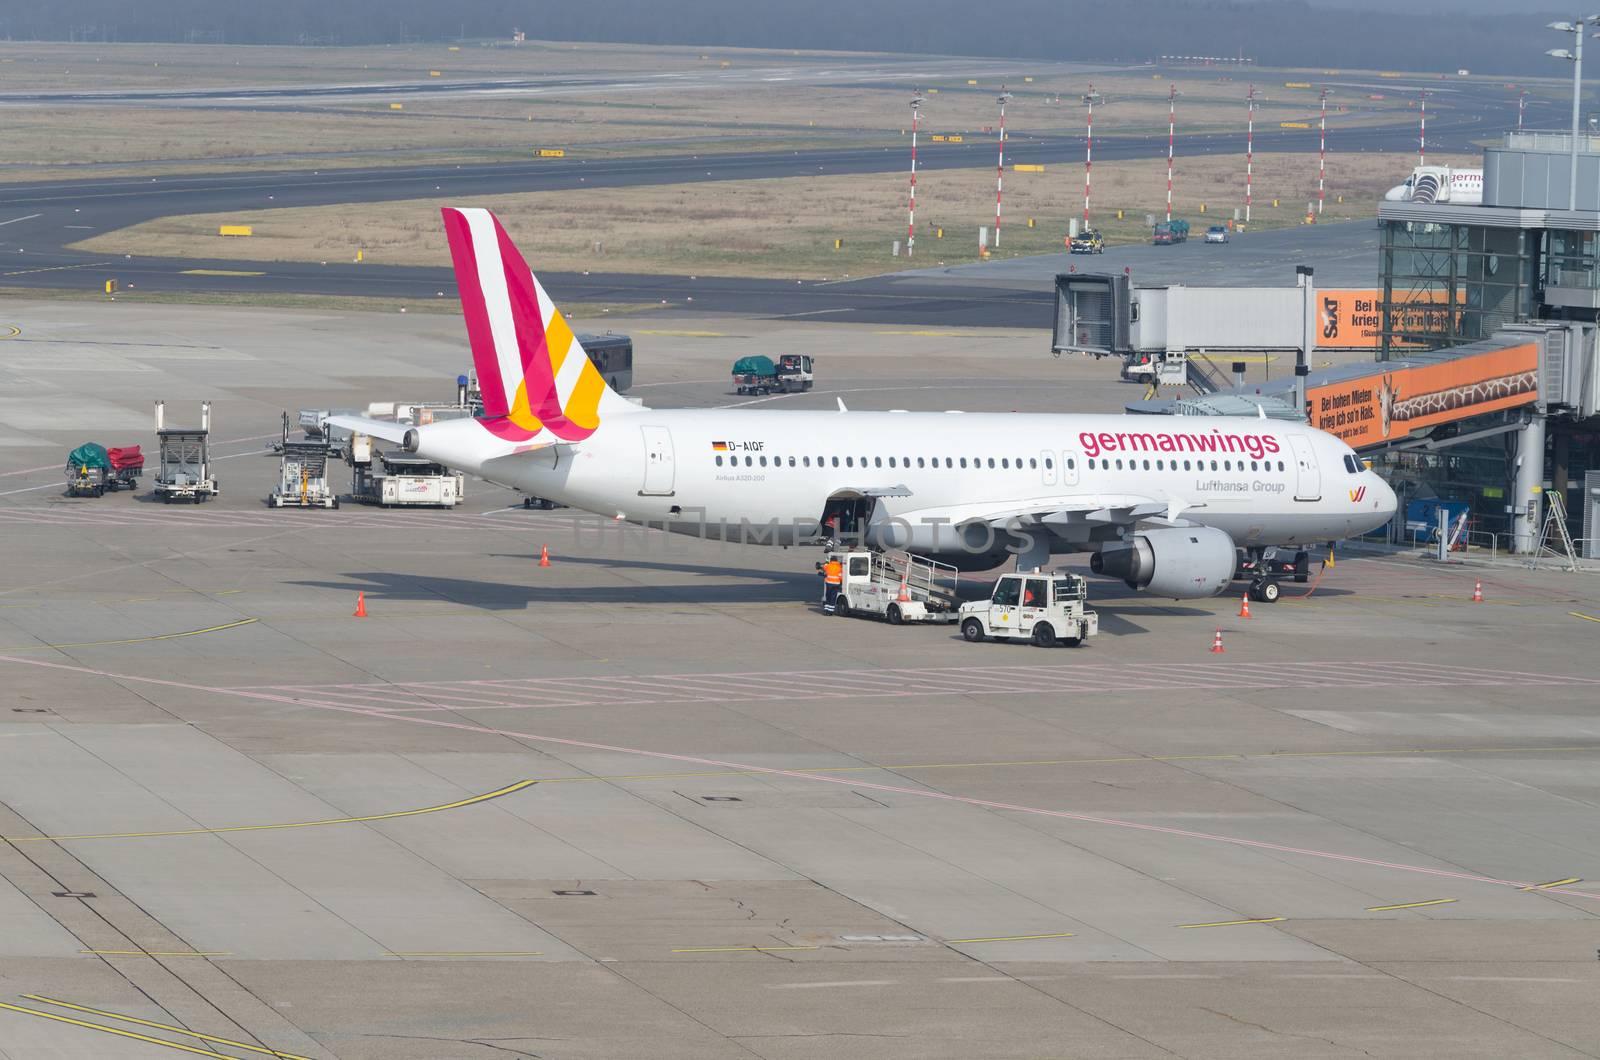 Dusseldorf, Nrw, Germany - March 18, 2015: German Wings Airbus A319 landing at the Dusseldorf airport. Terminal boarding passengers.